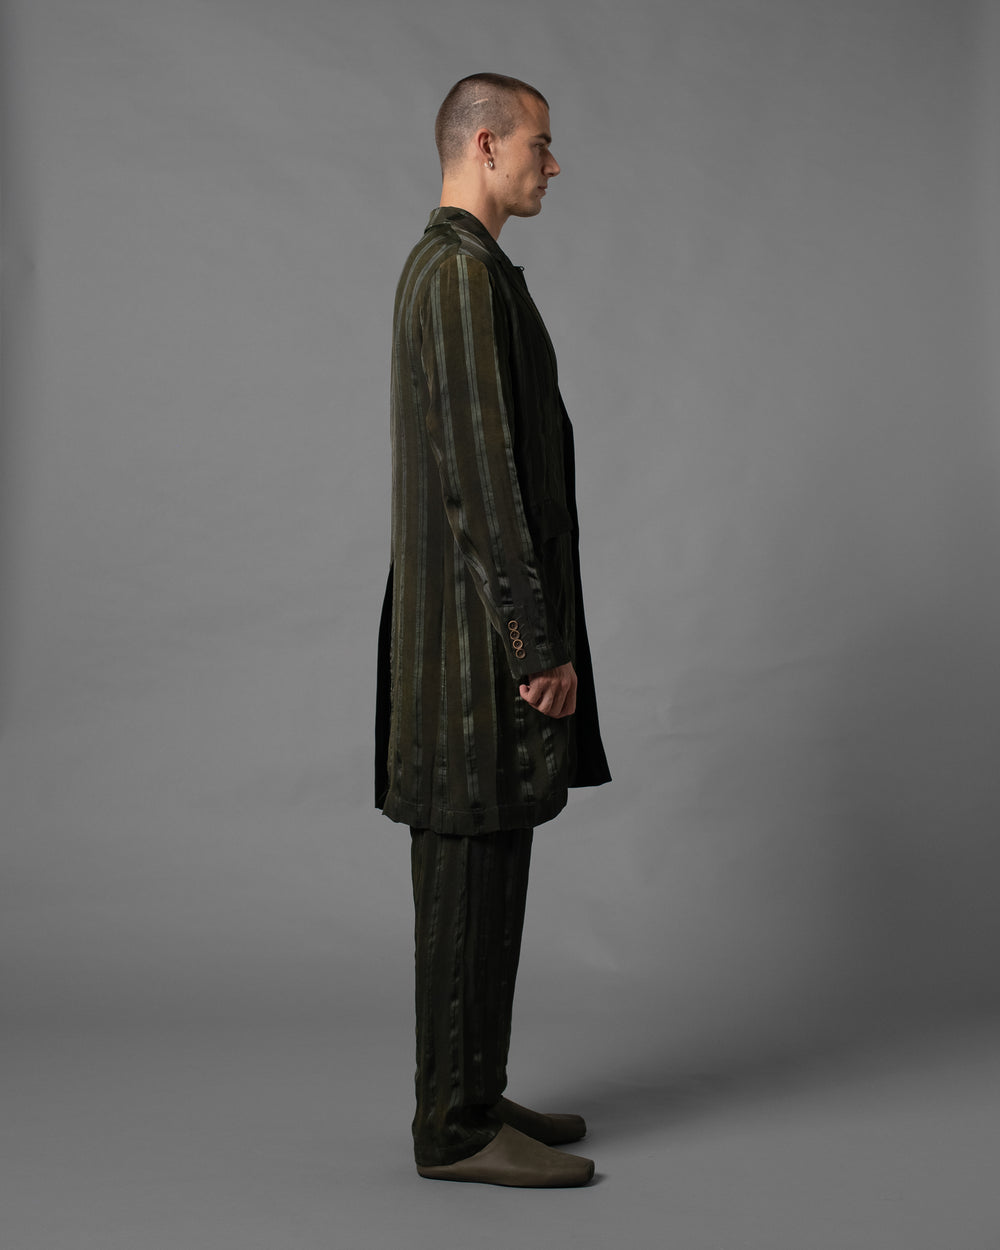 Giovanni Coat Dark Green / Grey